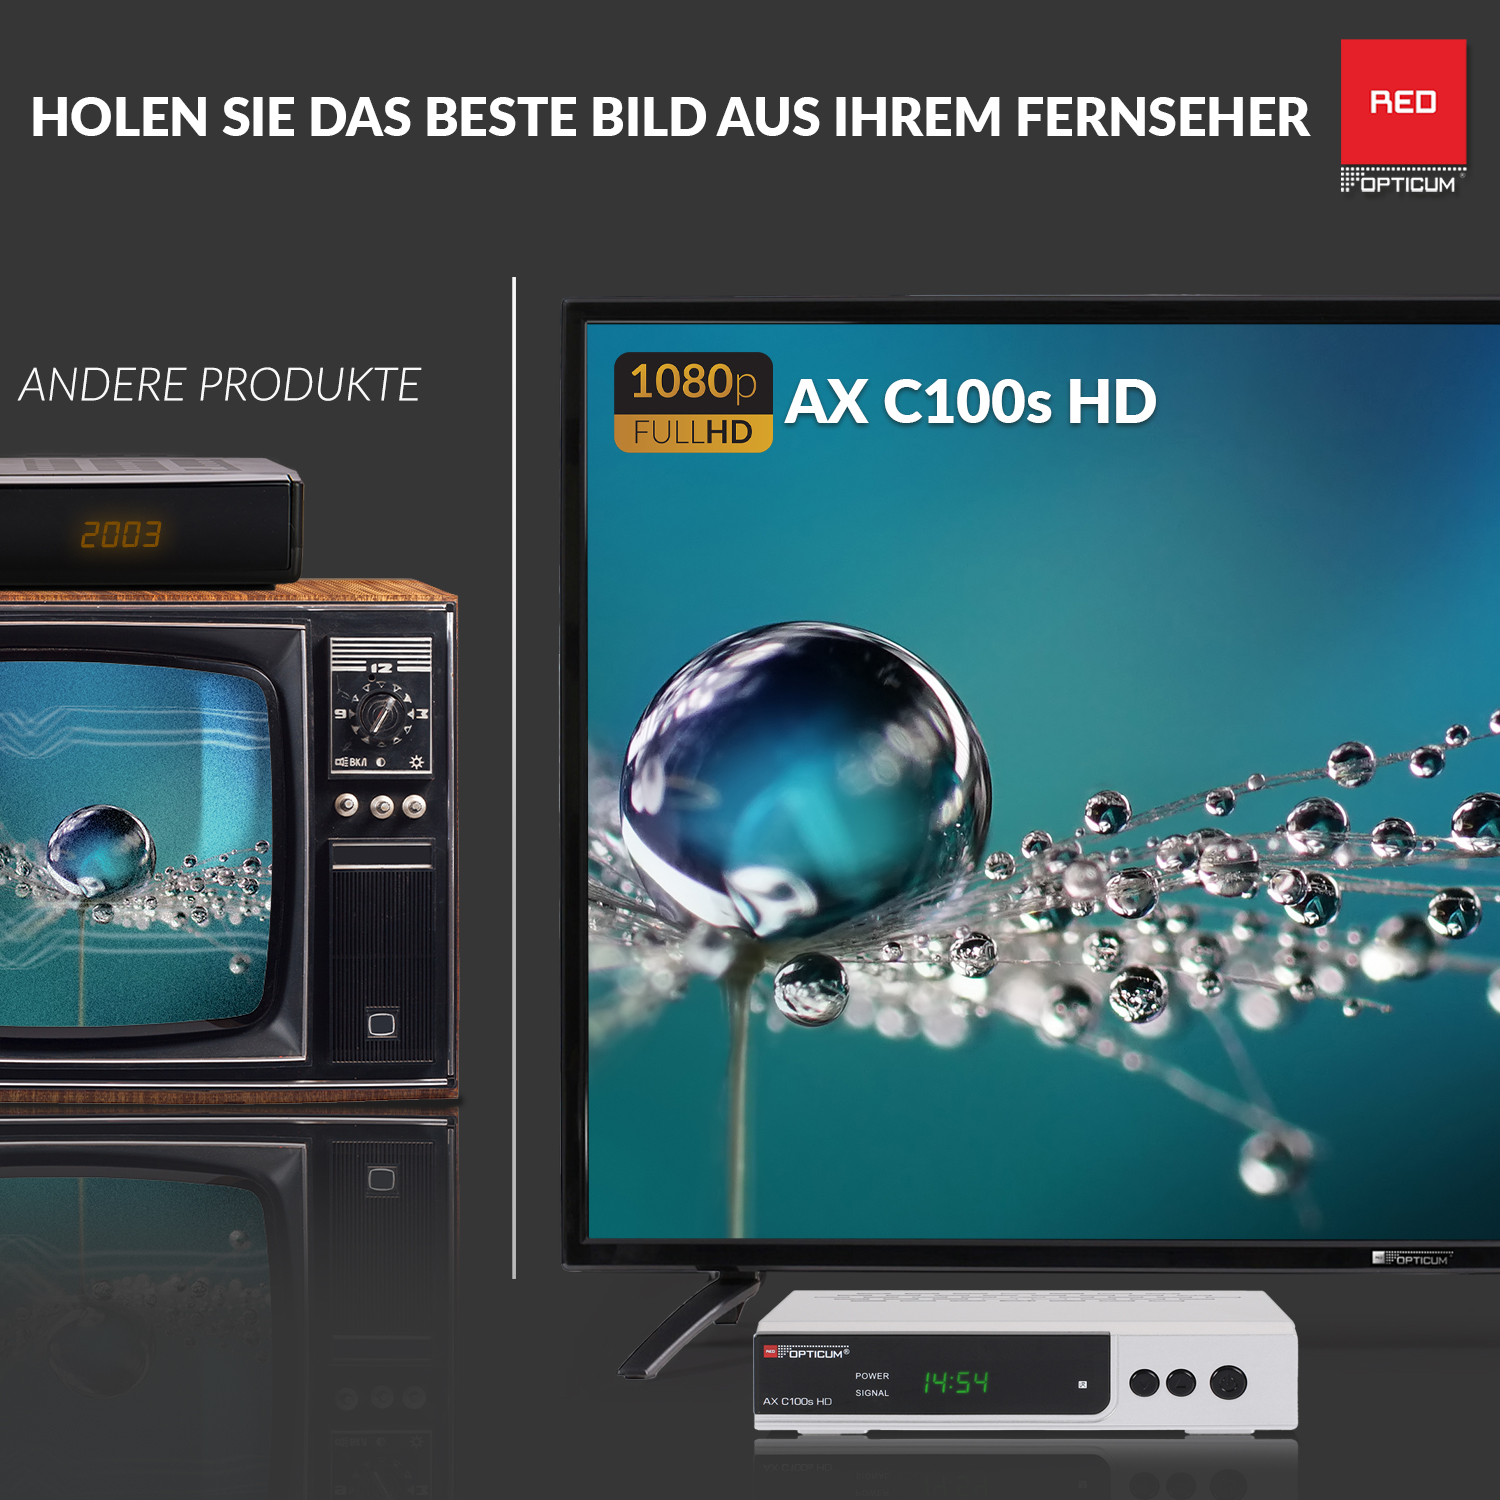 HD-EPG-HDMI-USB-SCART Receiver OPTICUM DVB-C, (HDTV, Kabelreceiver PVR-Funktion, DVB-C silber) RED PVR-Aufnahmefunktion Kabel-Receiver C100s I DVB-C2, mit HD AX Digitaler